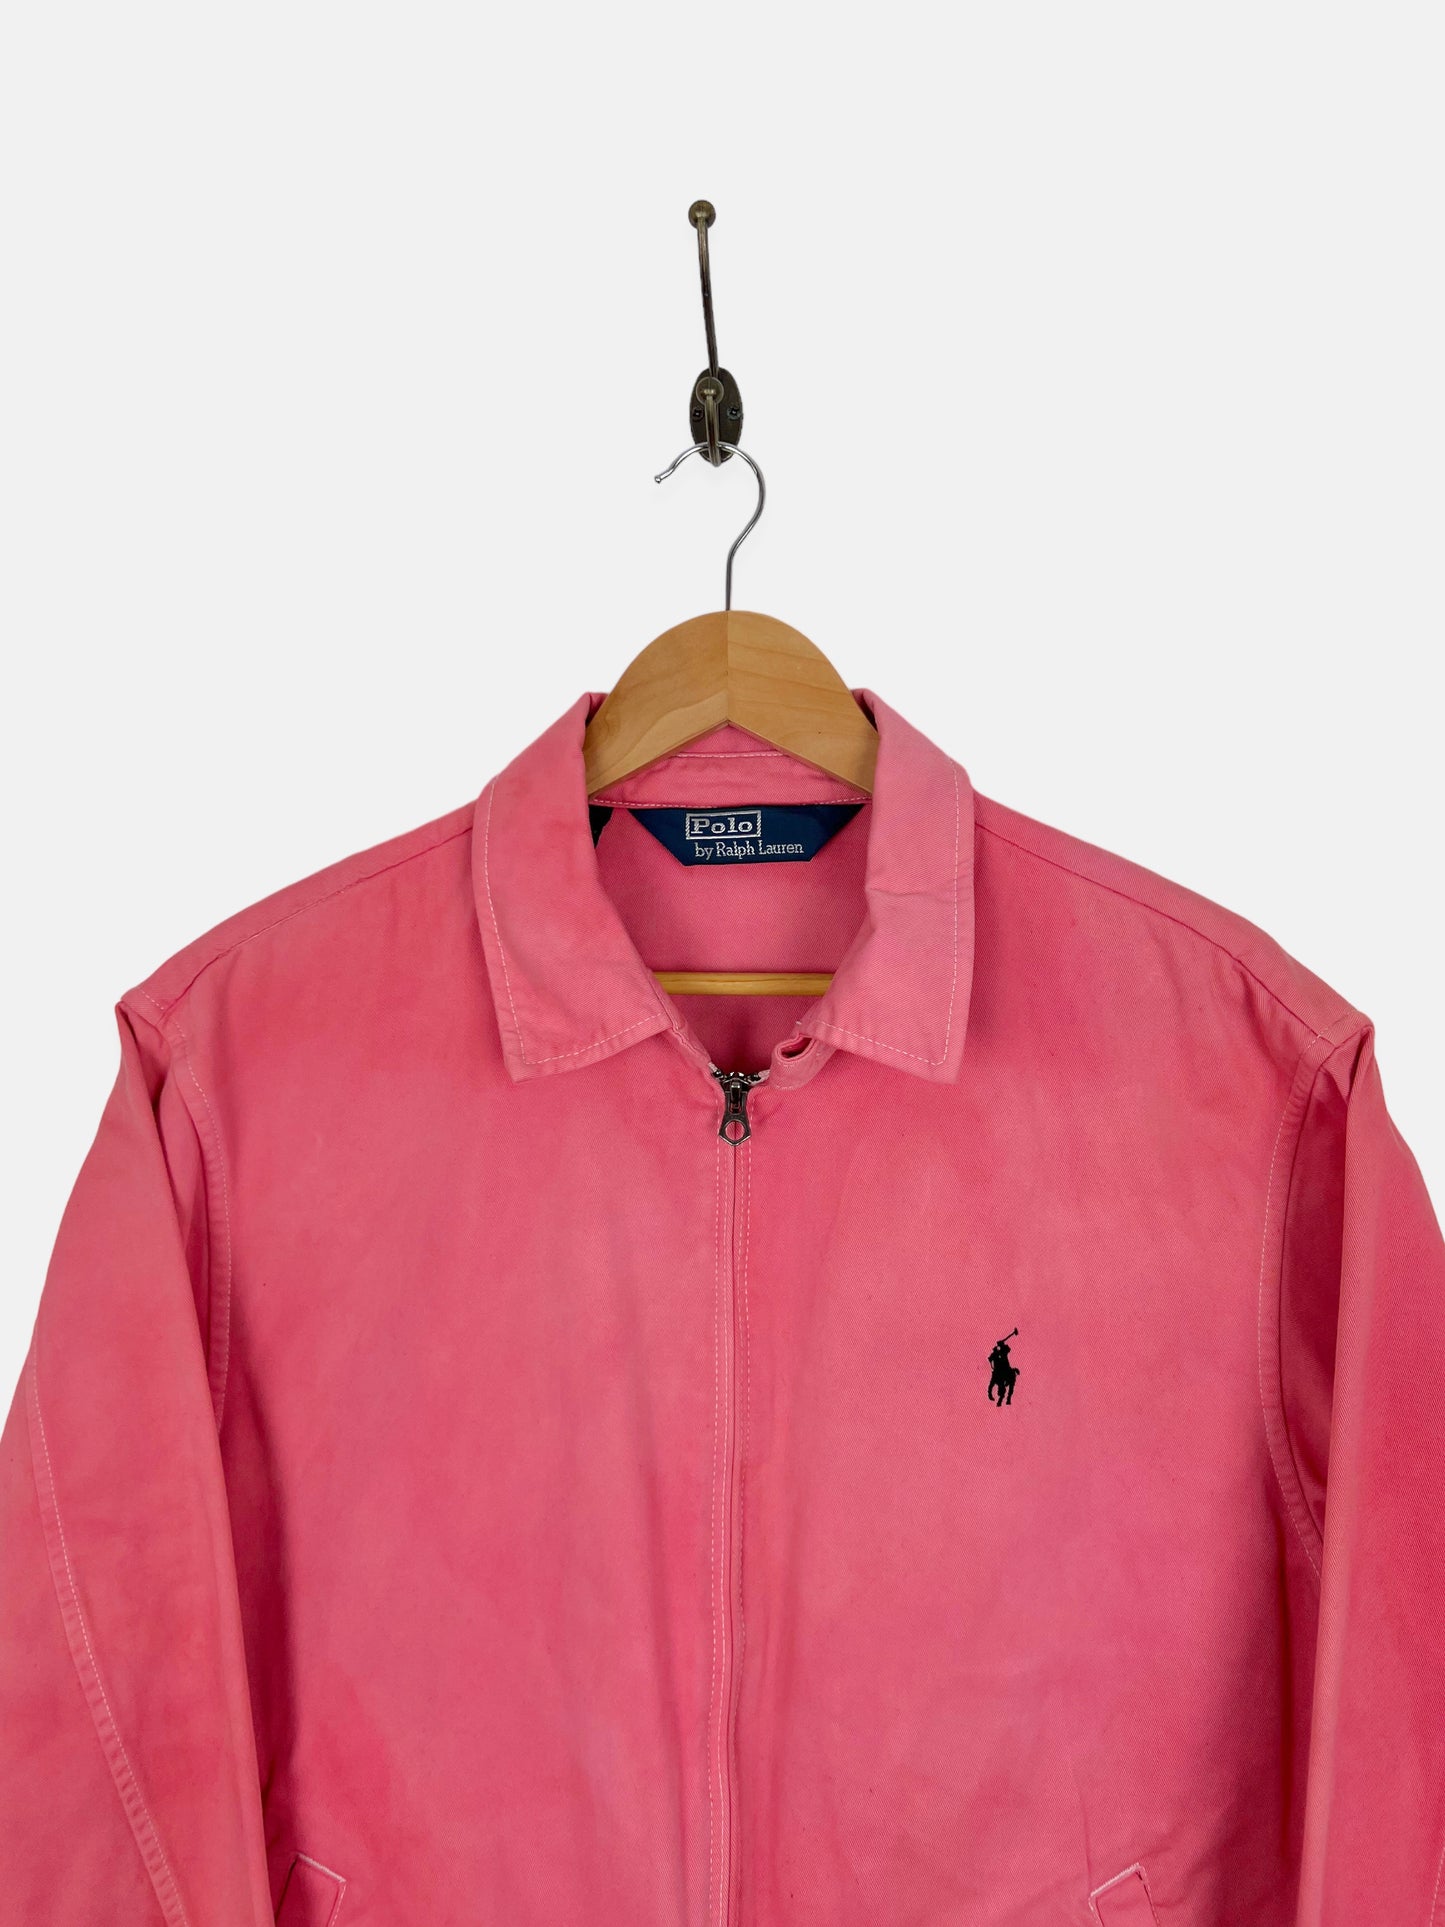 90's Ralph Lauren Embroidered Vintage Jacket Size 12-14